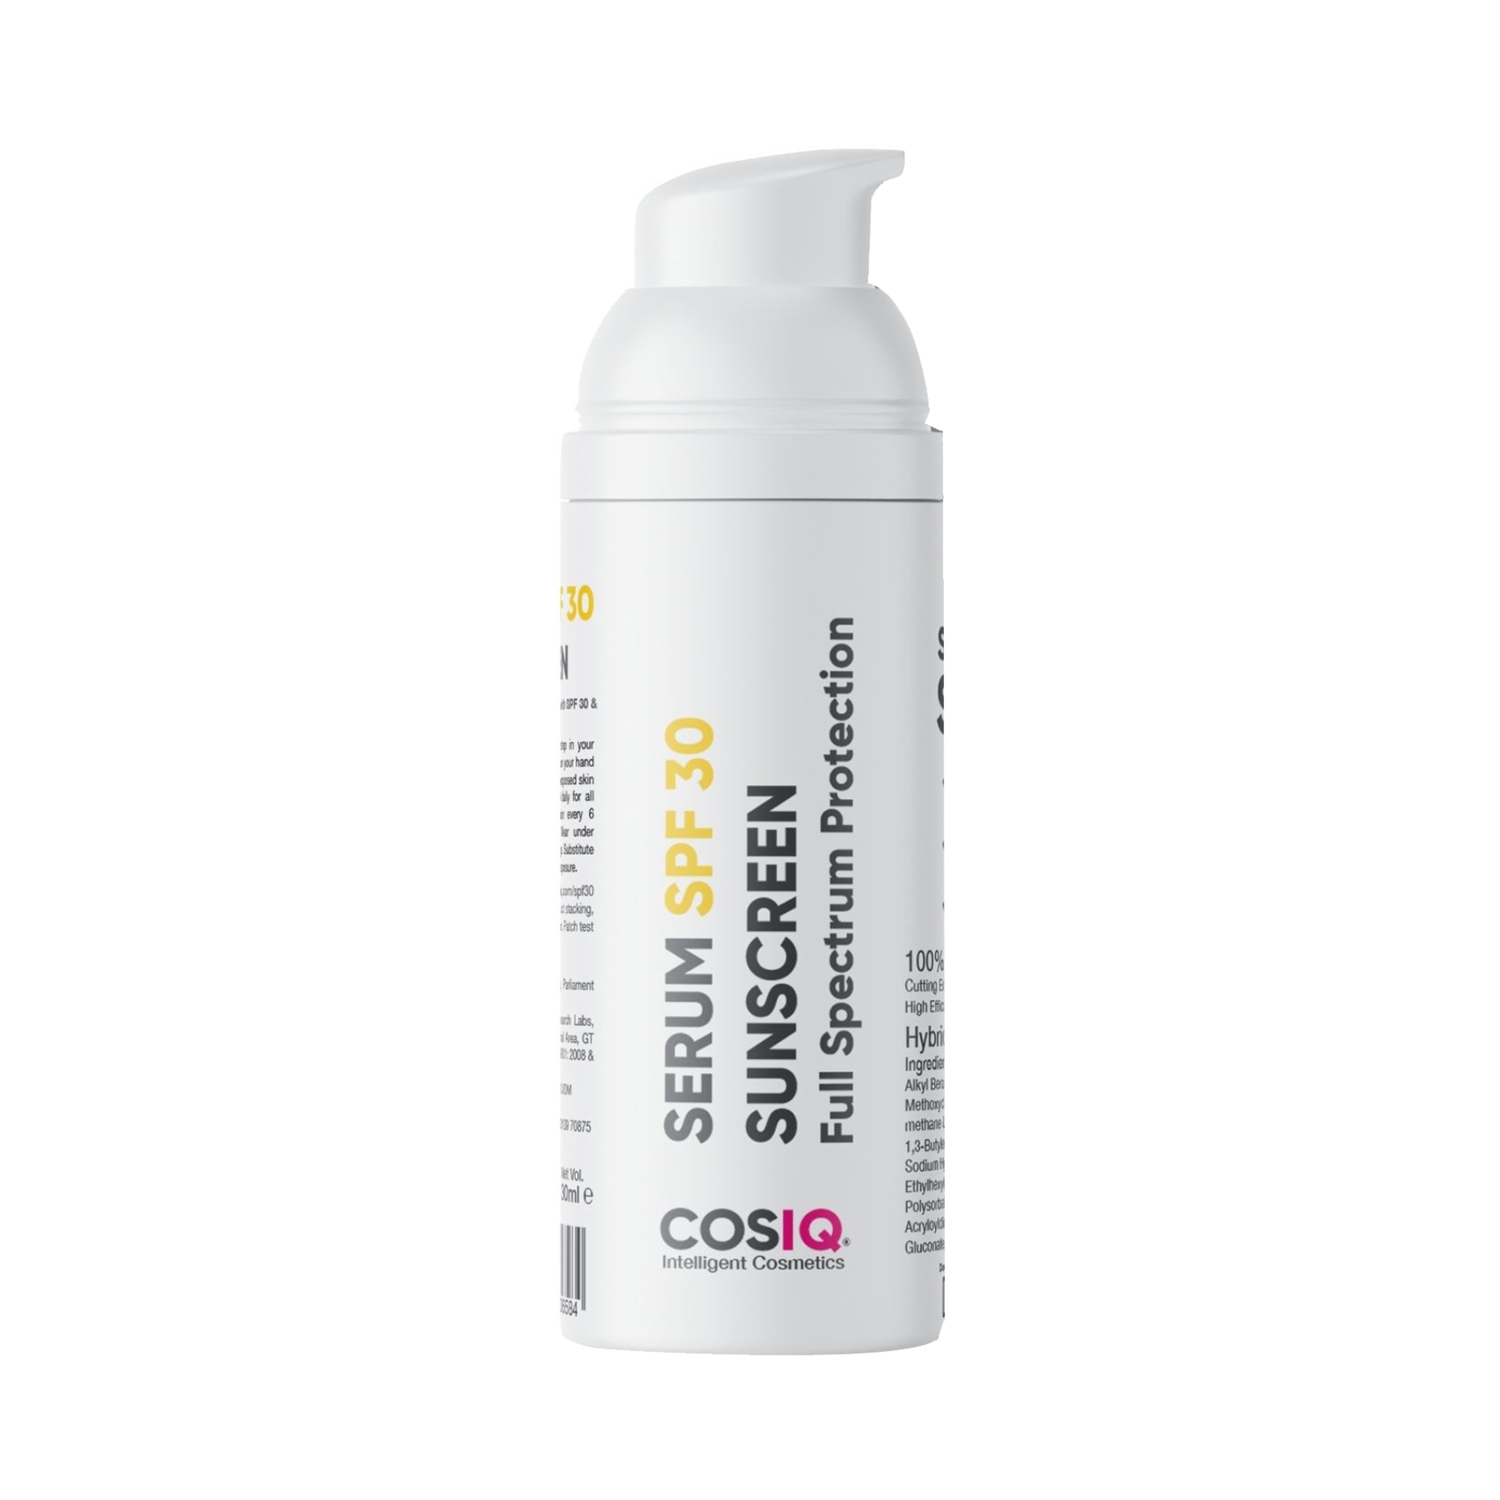 CosIQ | CosIQ Daily Use Sunscreen Serum SPF 30 PA++++ (30ml)